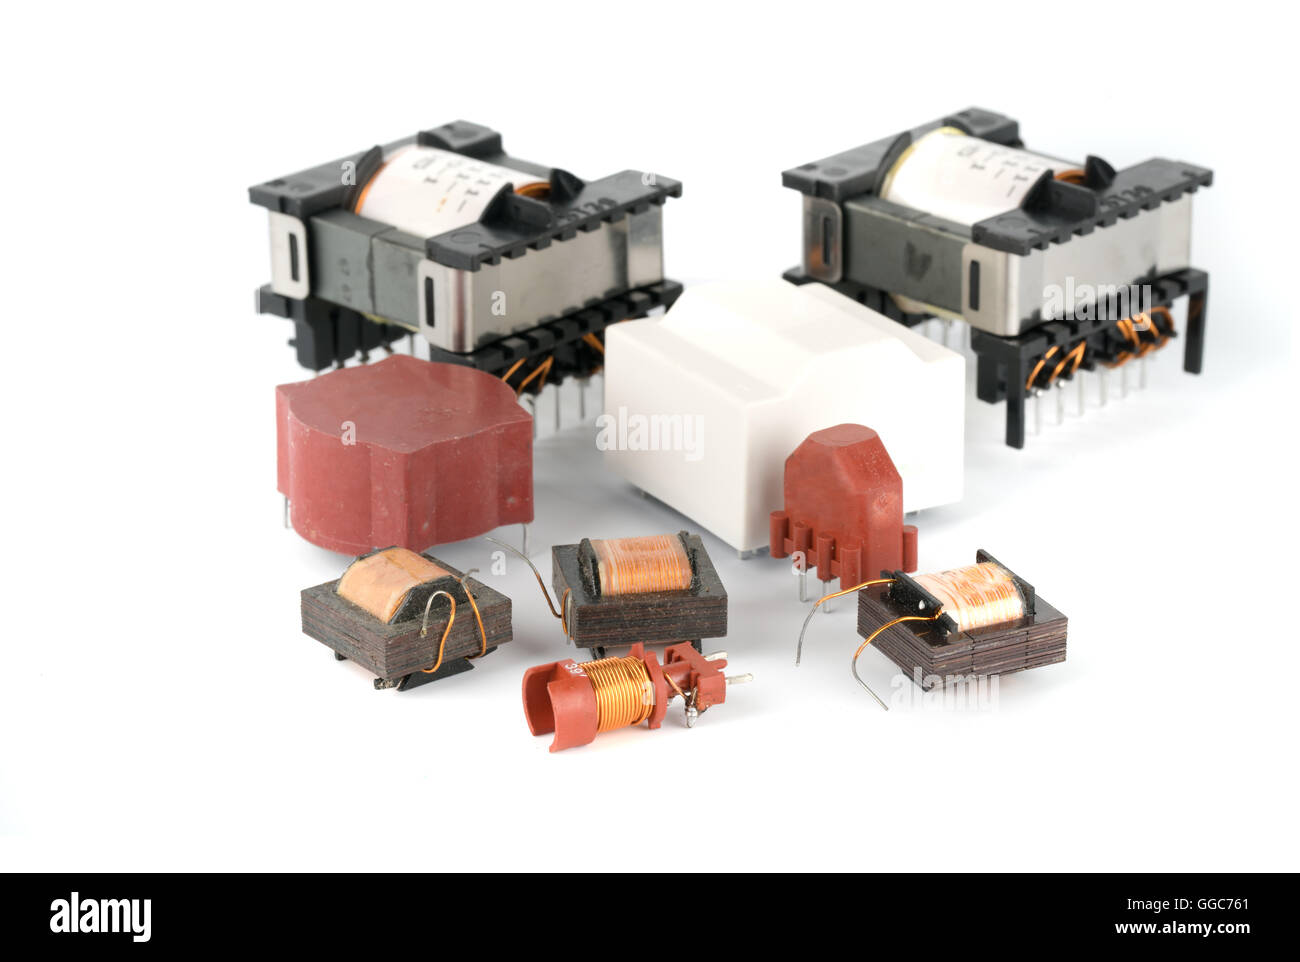 Ferrite elektronik transformator for  electronic devices Stock Photo